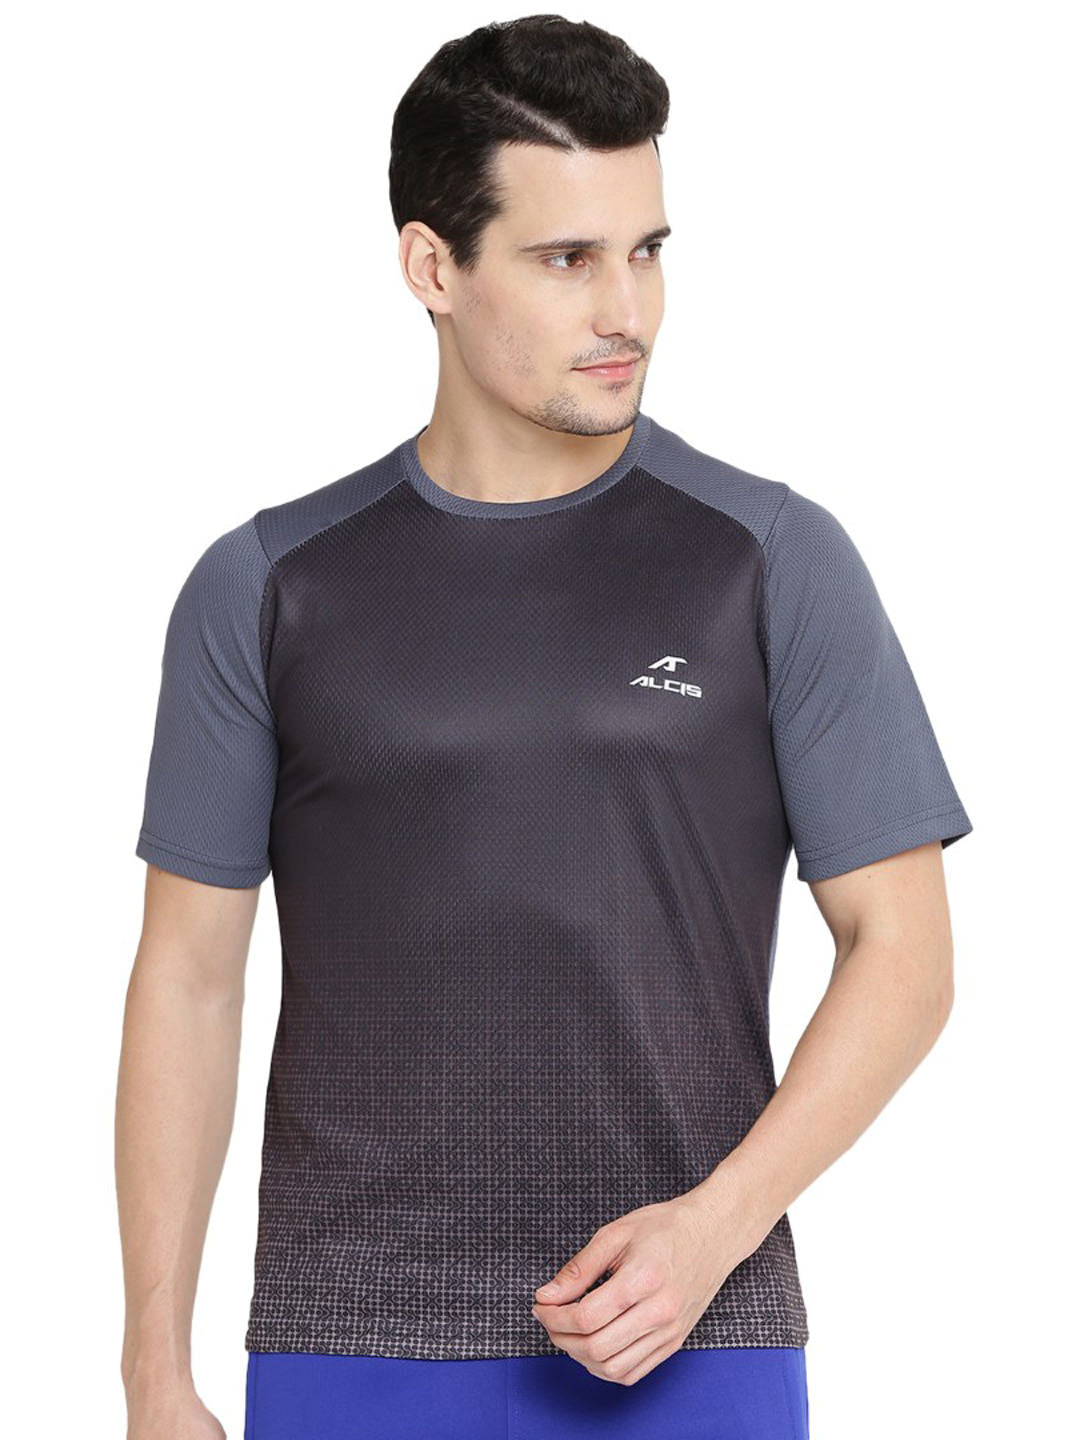 Alcis Men Black Grey Printed Round Neck Running T-shirt 202MTE006-S